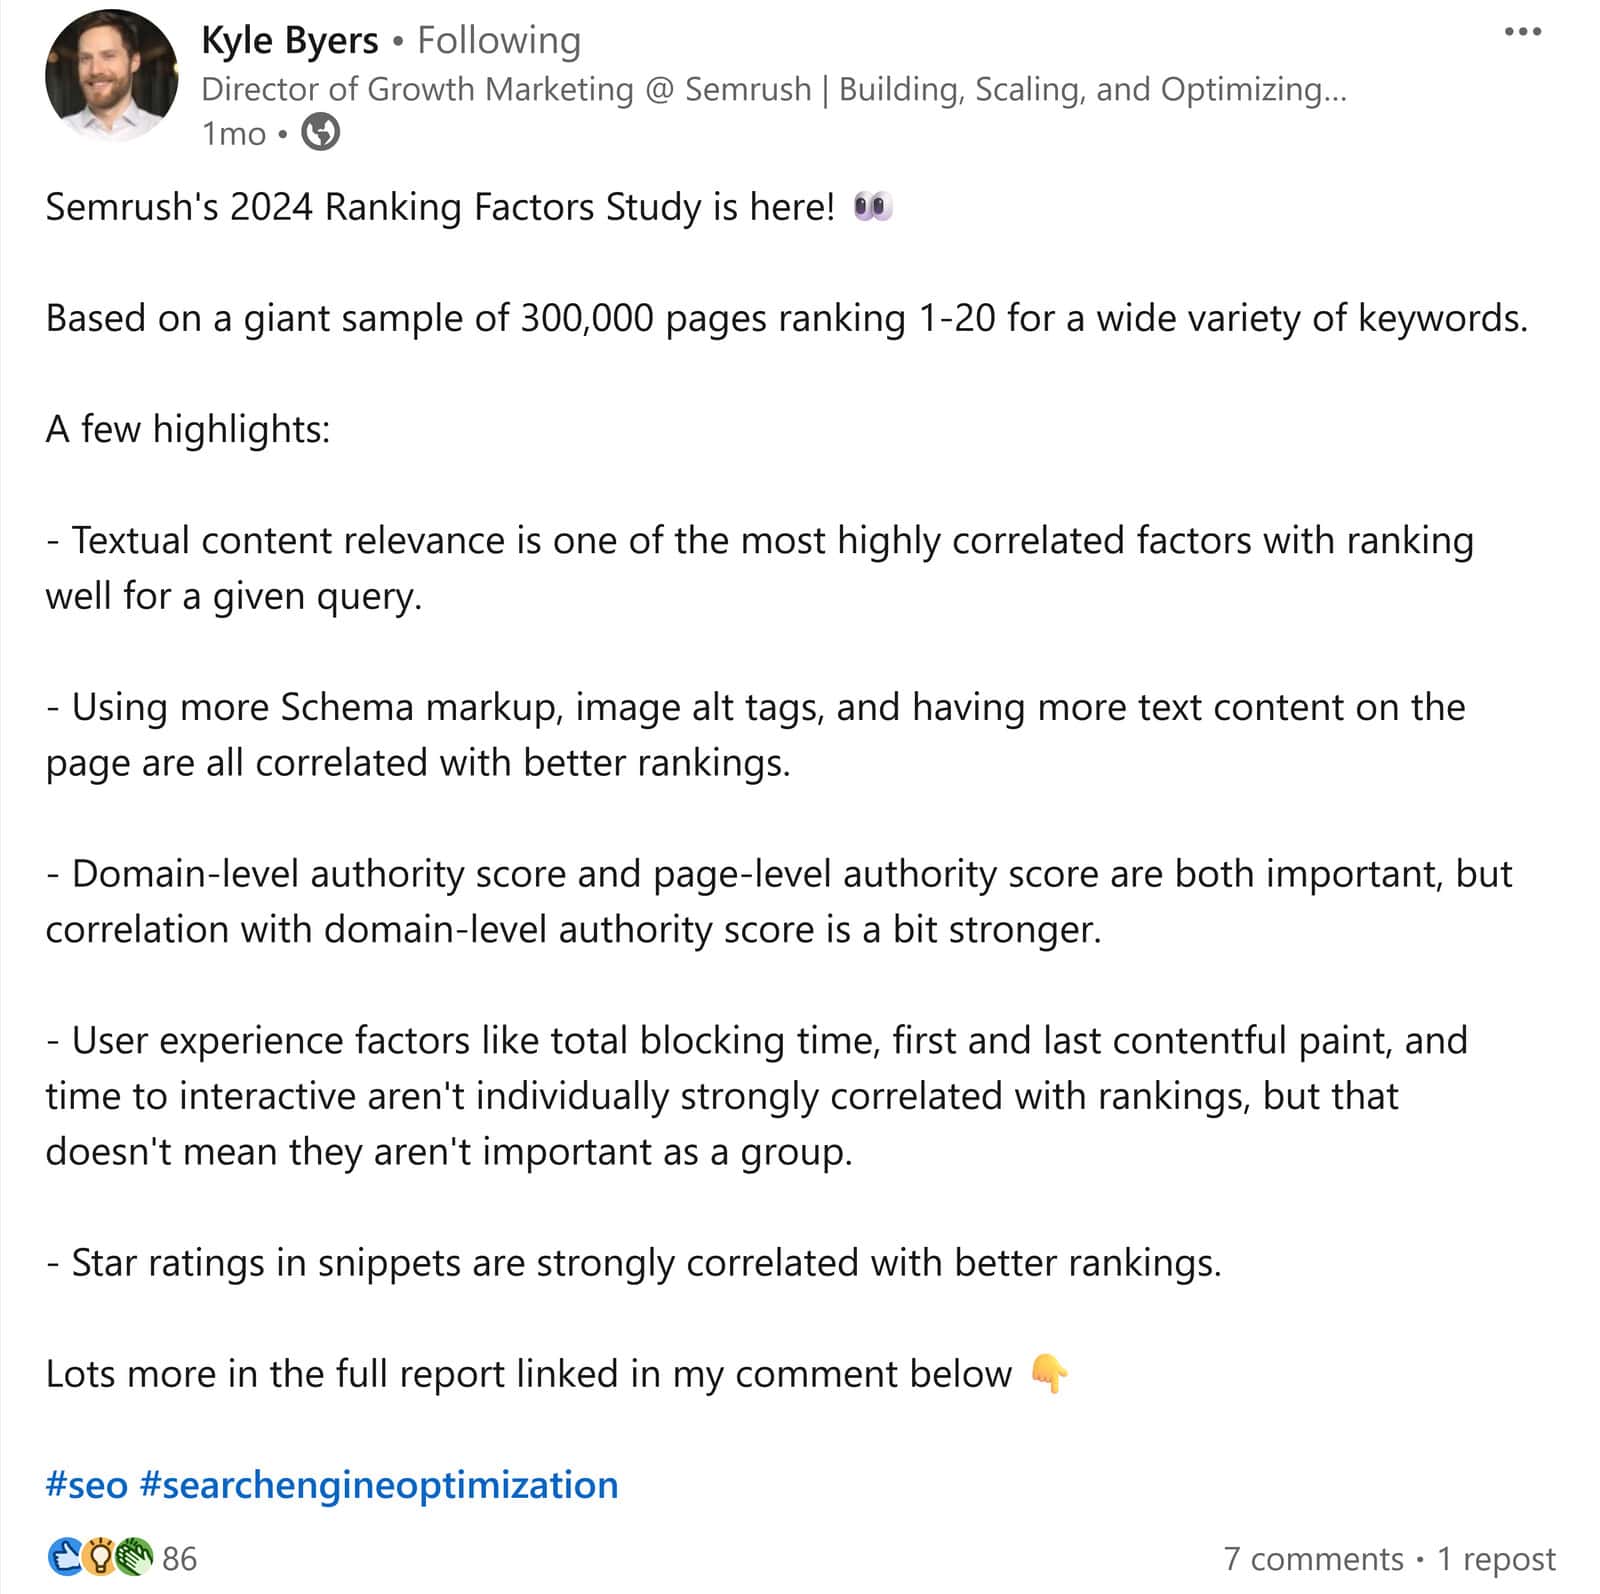 Kyle Byers' post on LinkedIn about Semrush's 2024 Rankings Factors Study